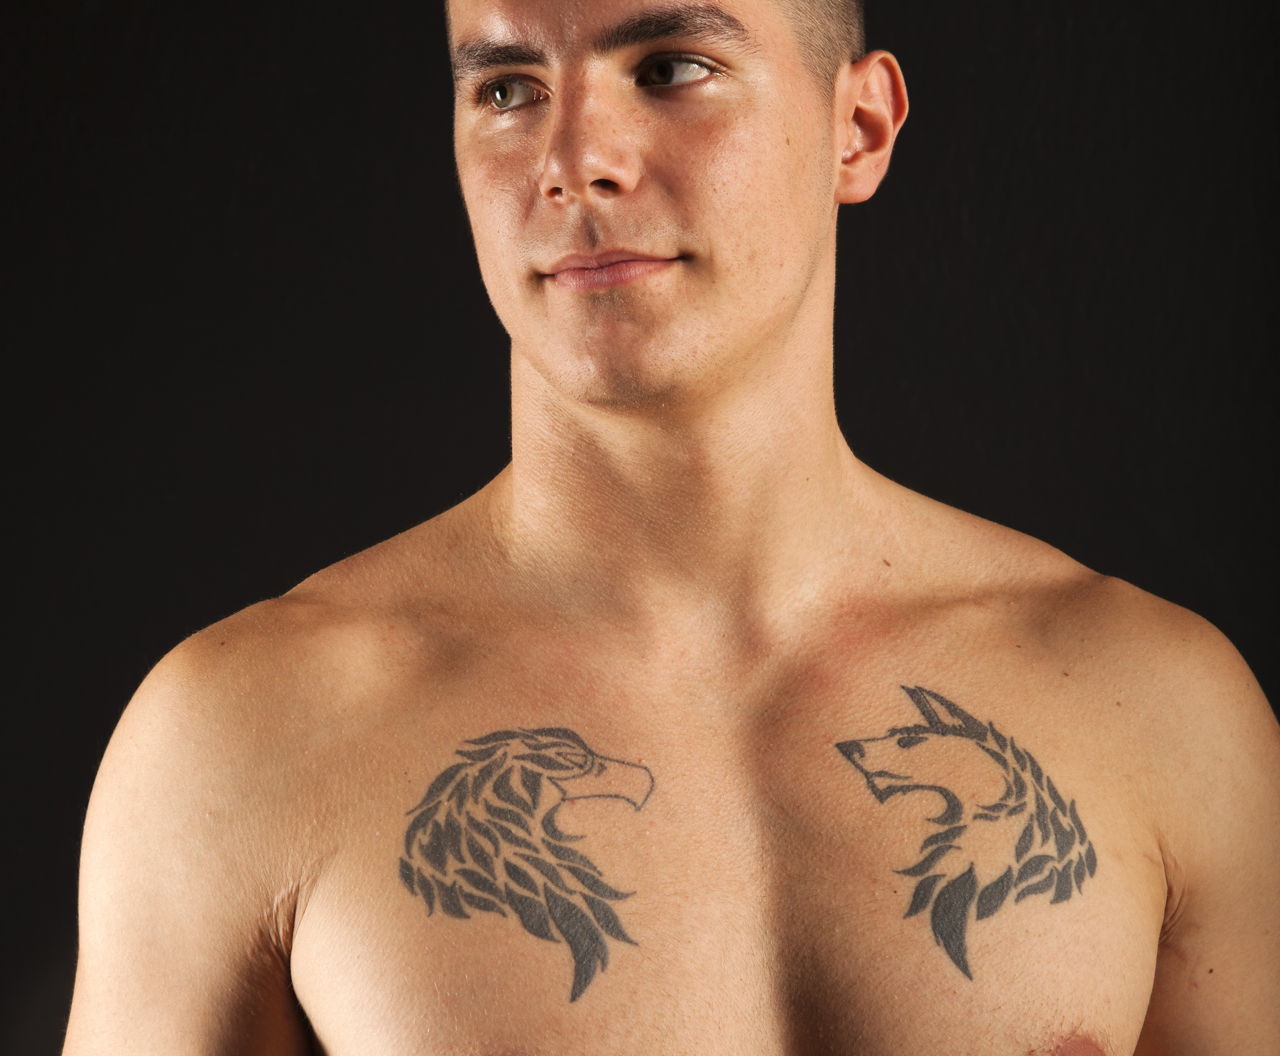 Tattoo Spots for Men - Thoughtful Tattoos